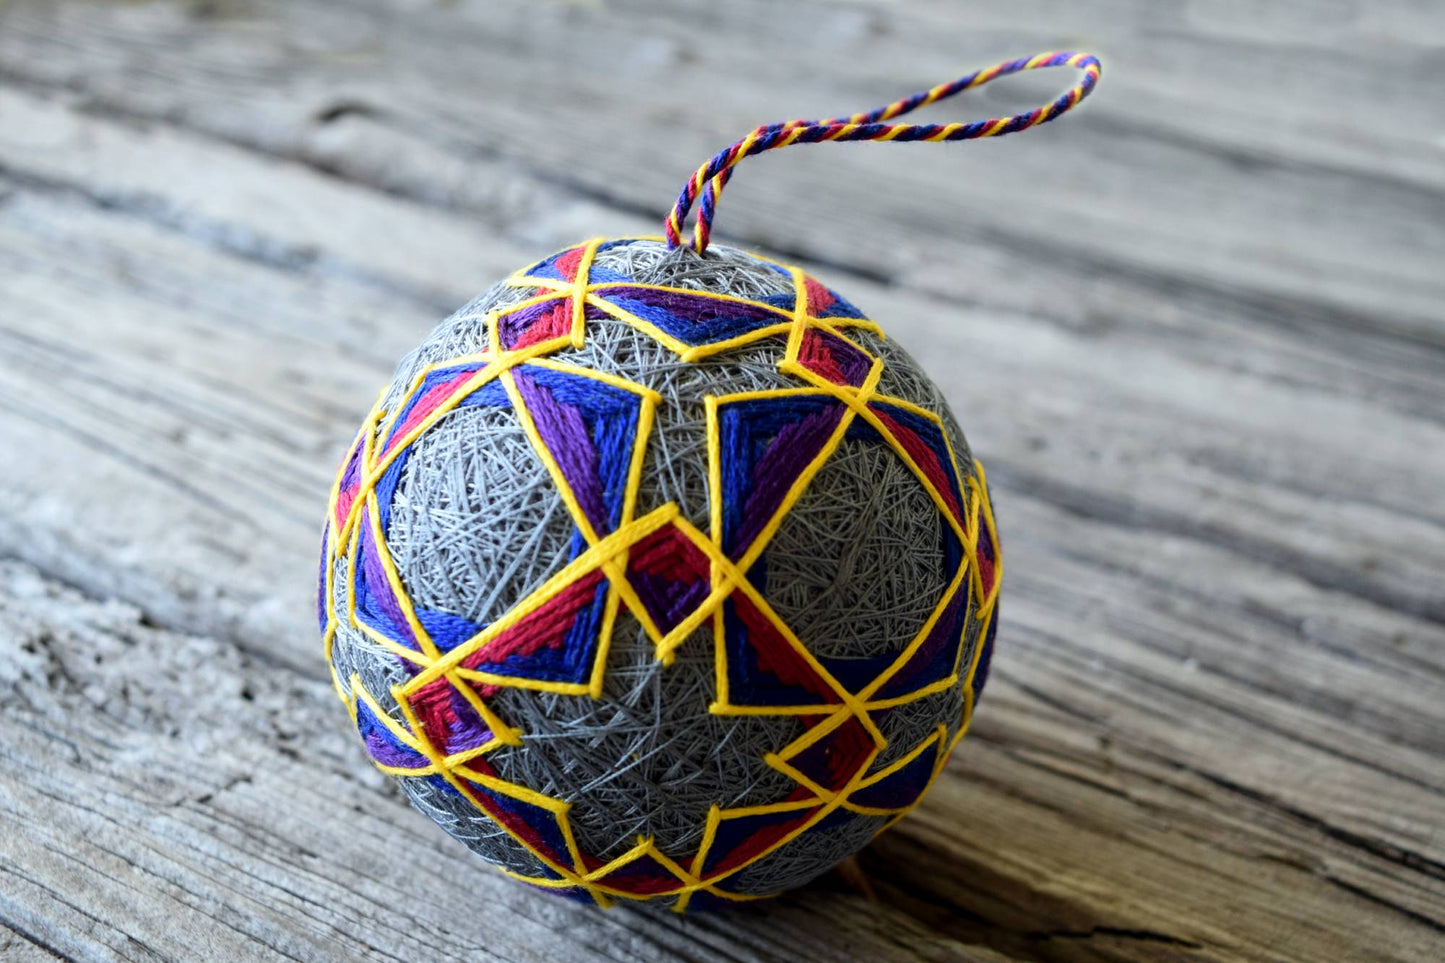 Japanese temari ball in jewel tones hand embroidered in interlocking open pattern